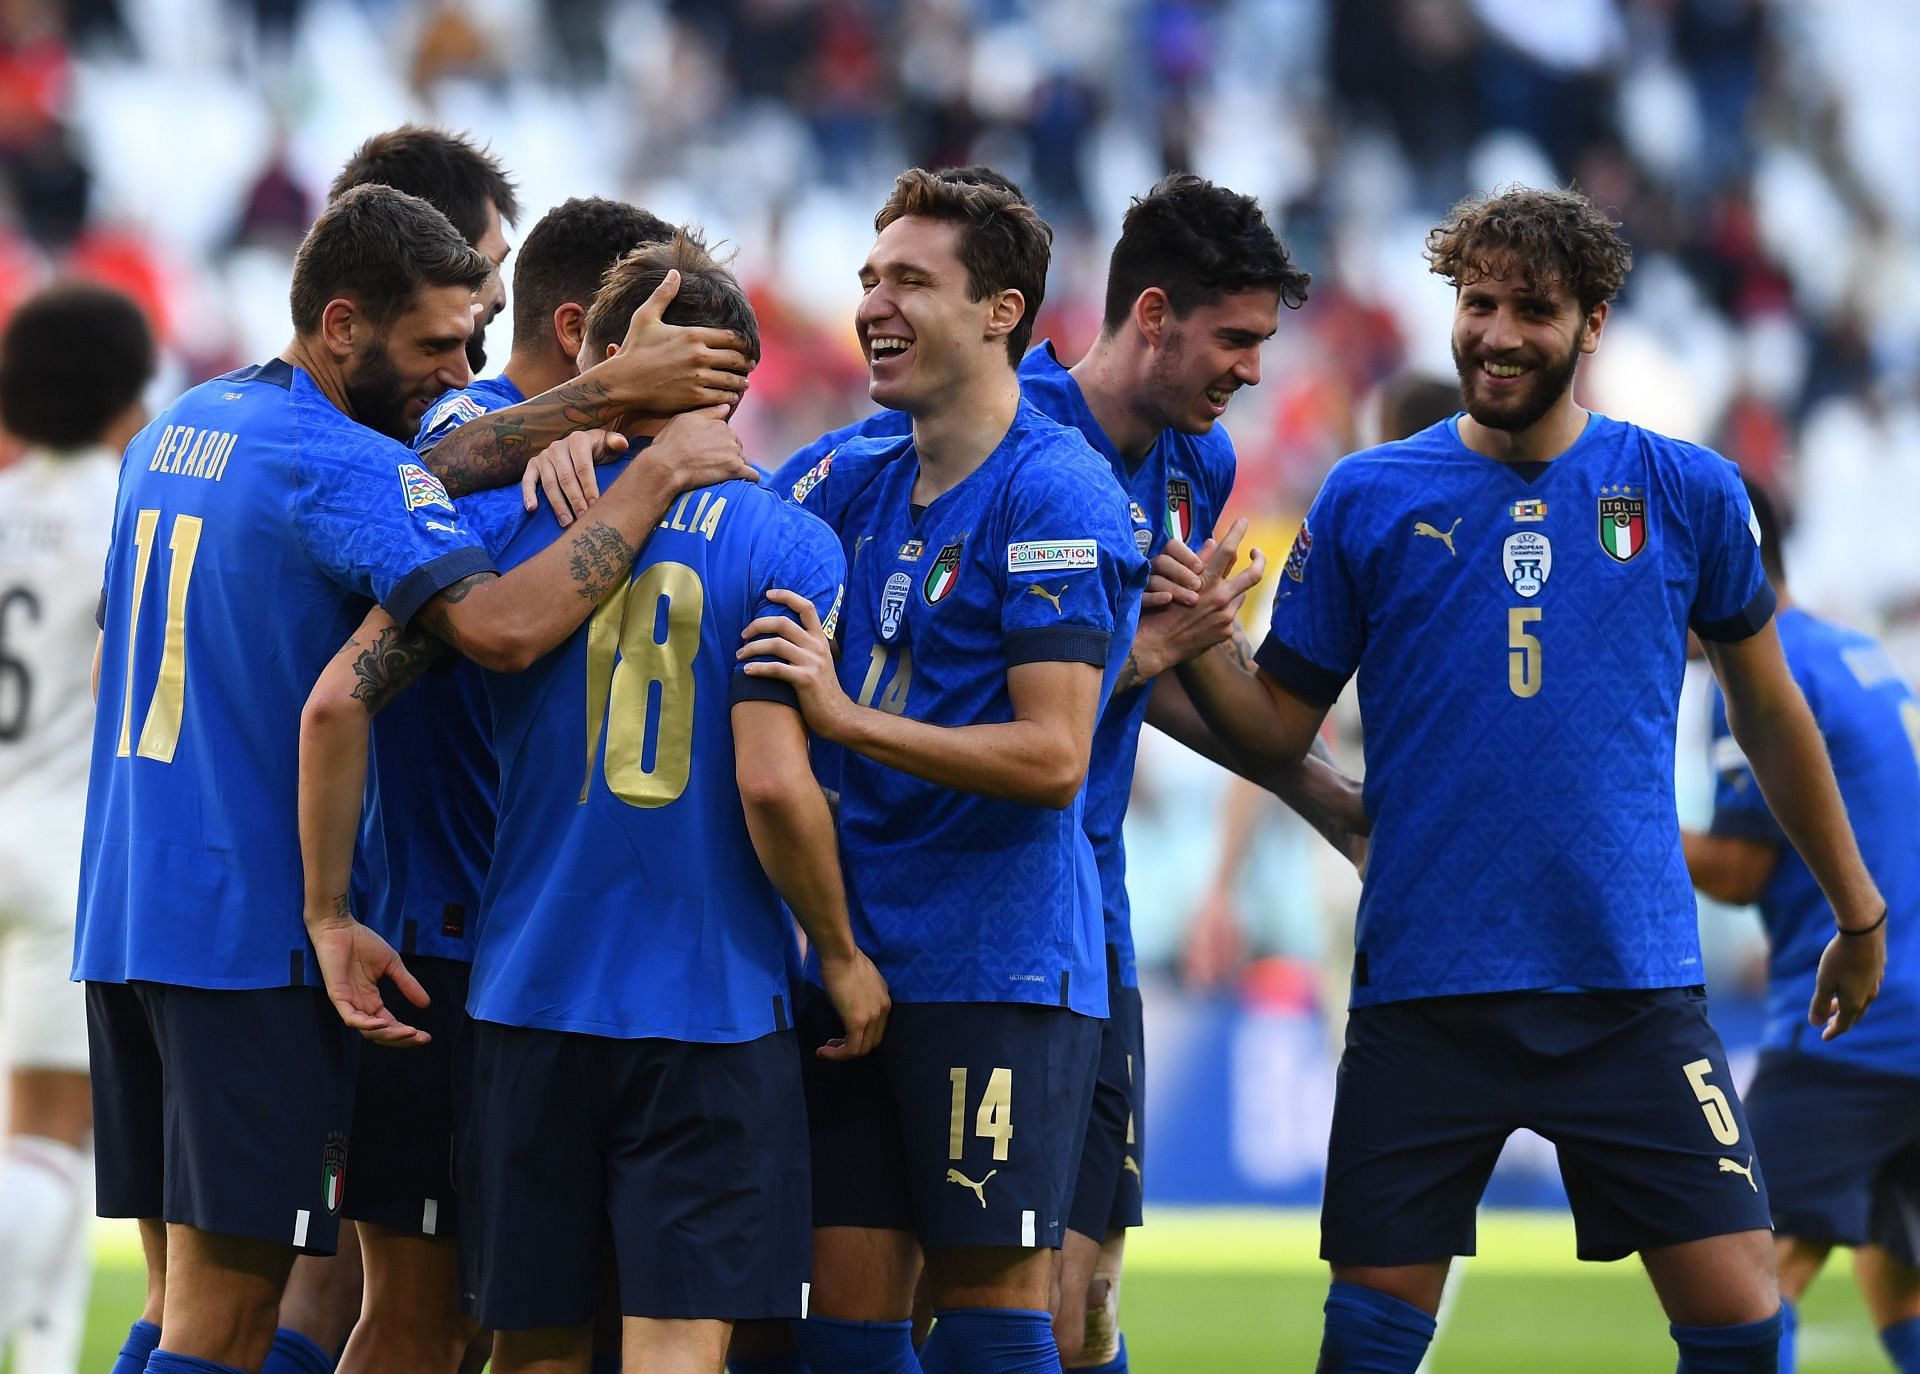 Italy play Switzerland on Friday